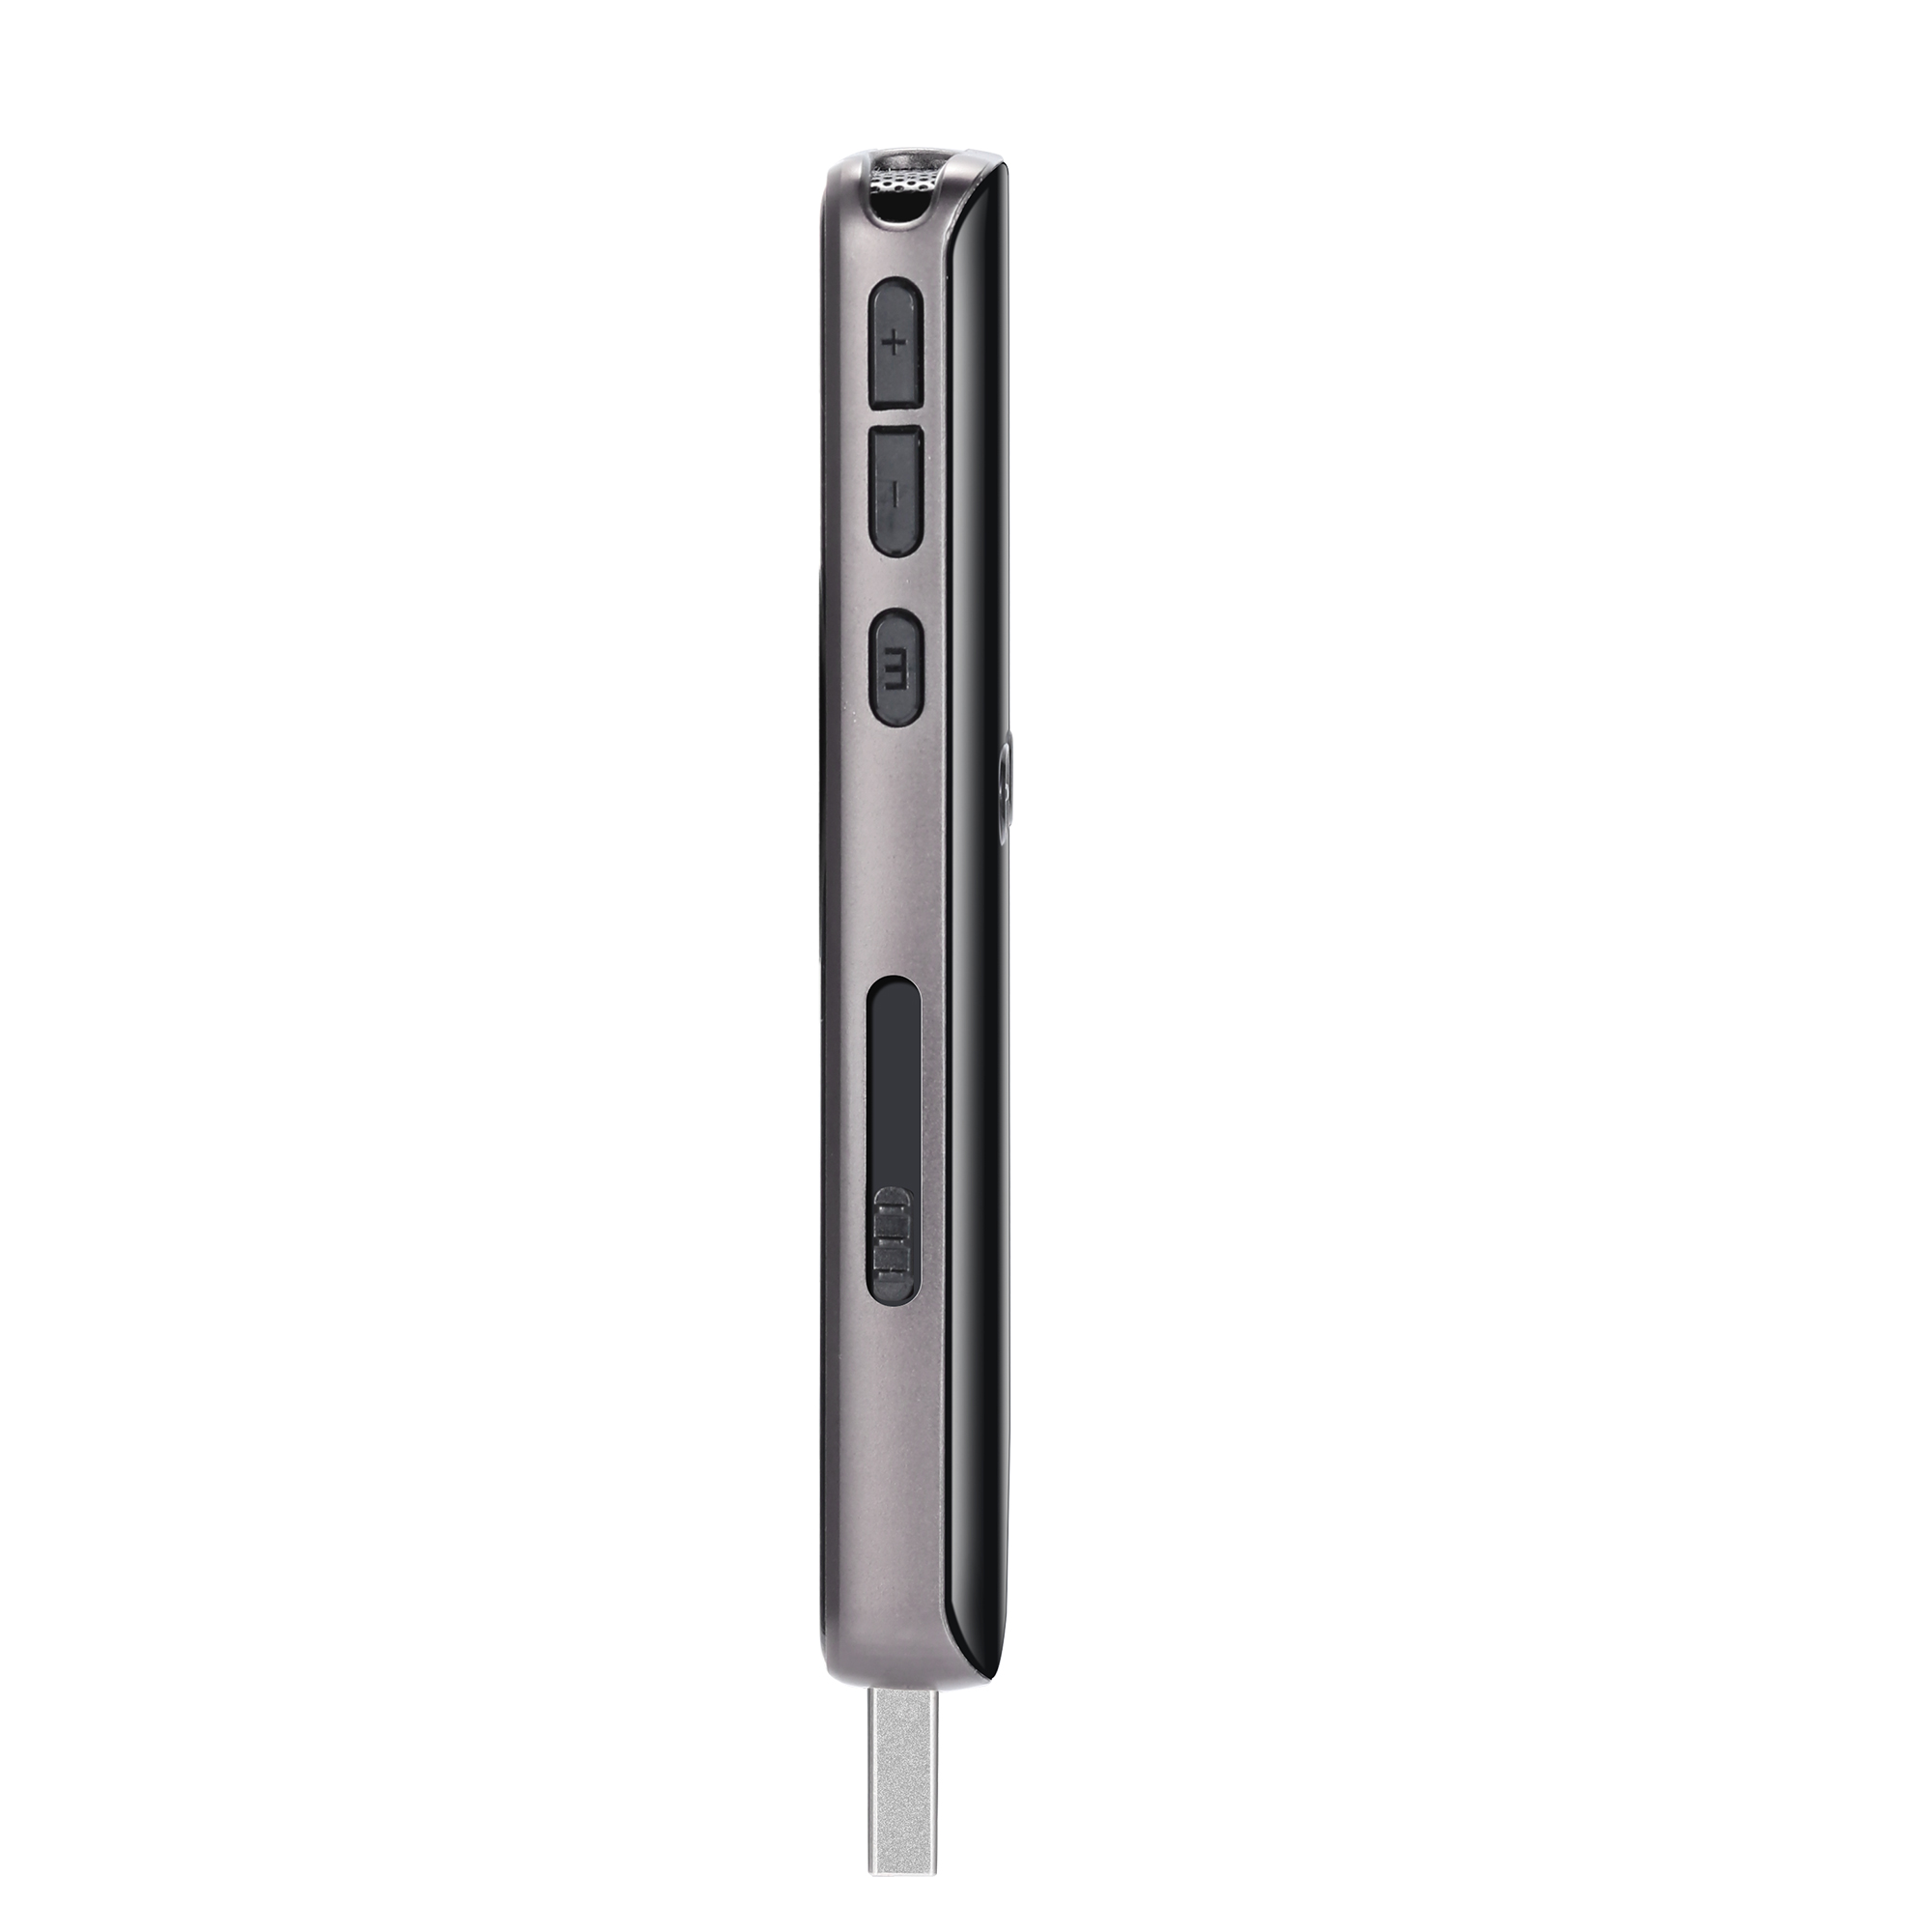 Vandlion V33 Handheld Professional Portable Digital Voice Recorder MP3 Recording Pen USB 2.0 Plug Audio Interface Record Players